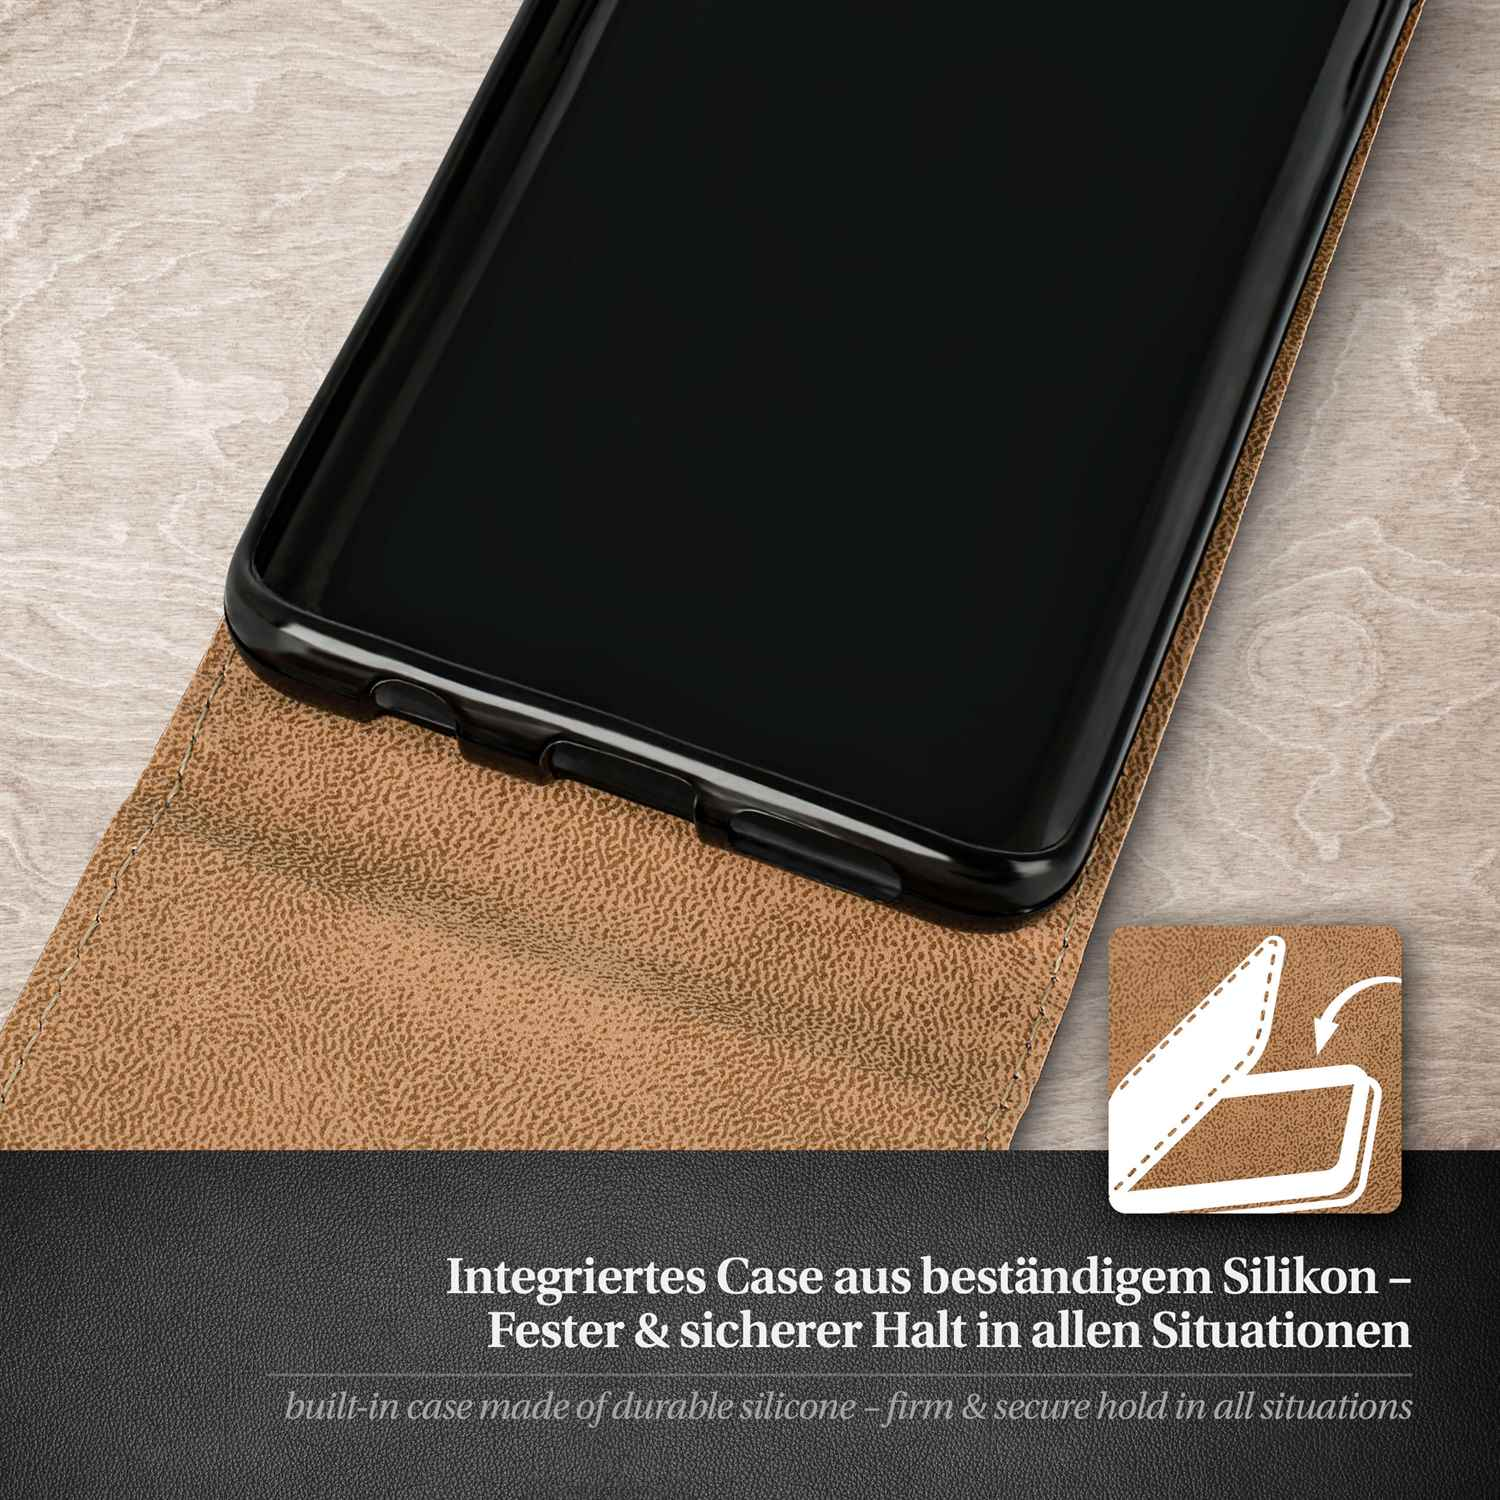 Cover, Case, Flip Flip MOEX Samsung, S9 Plus, Deep-Black Galaxy